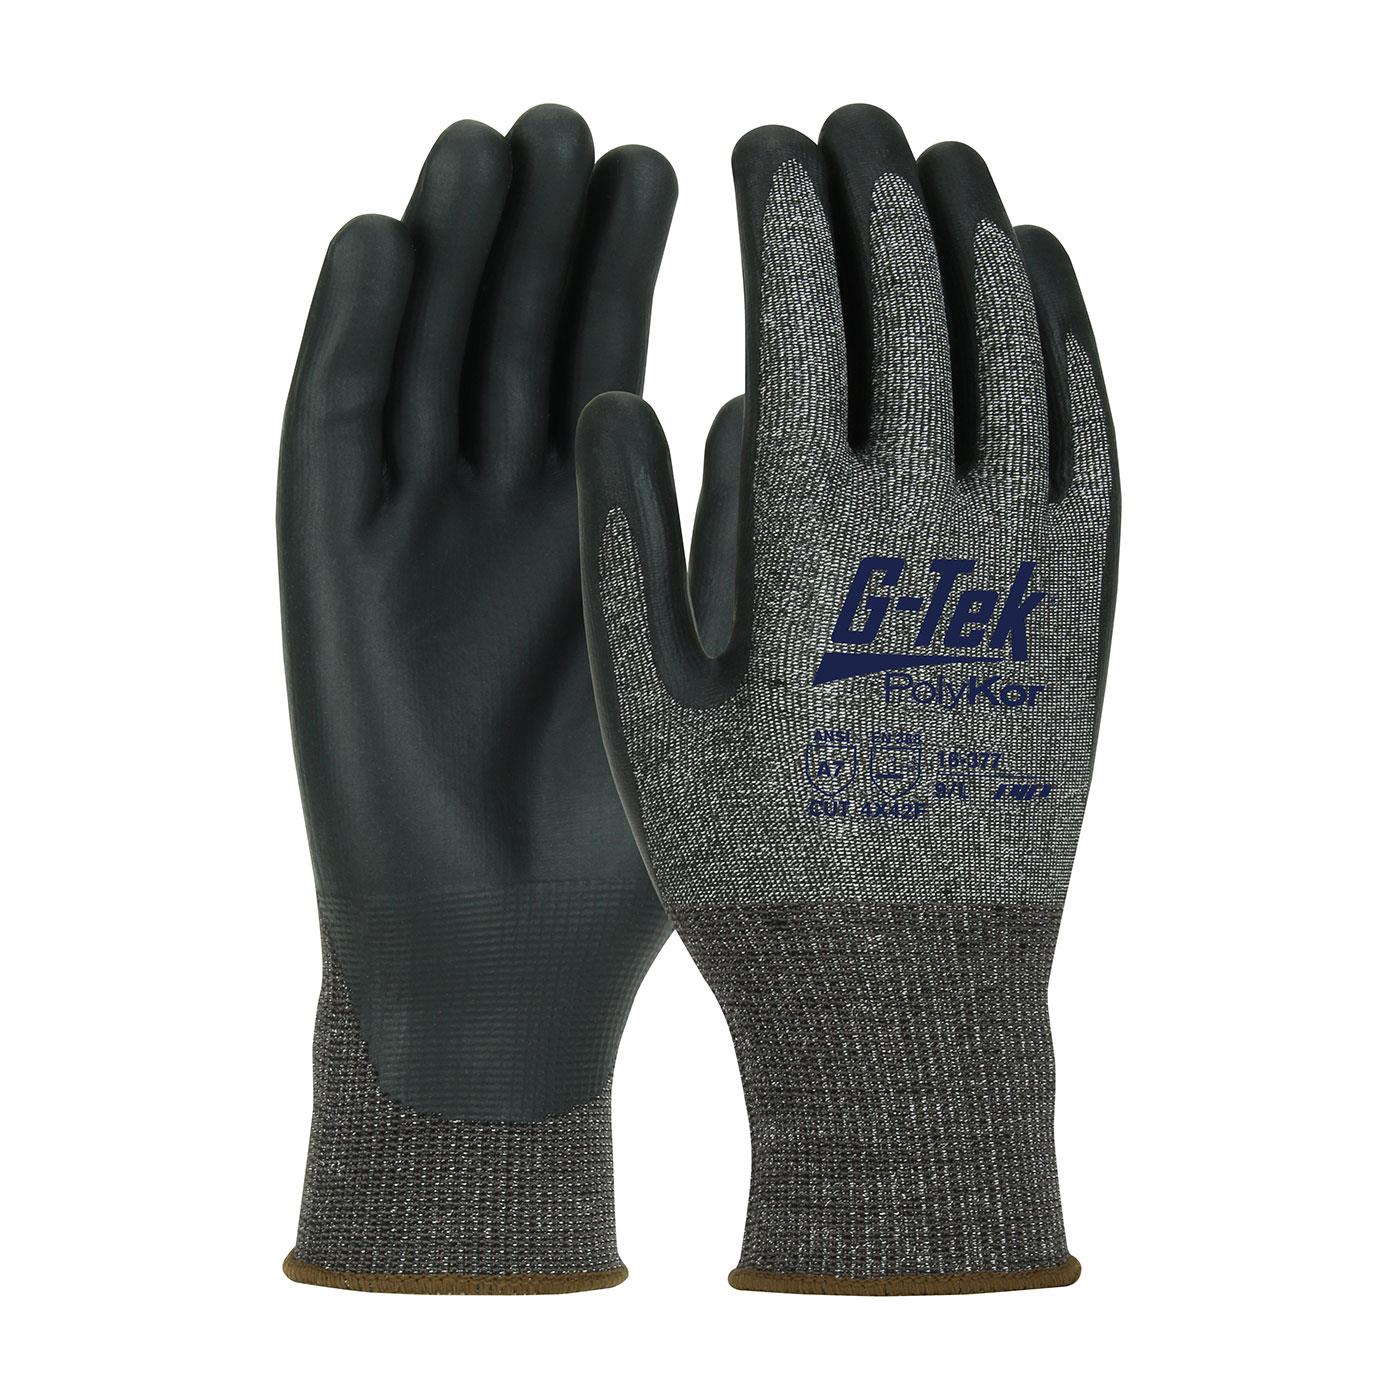 G-TEK POLYKOR X7 NEOFOAM PALM COAT - Cut Resistant Gloves